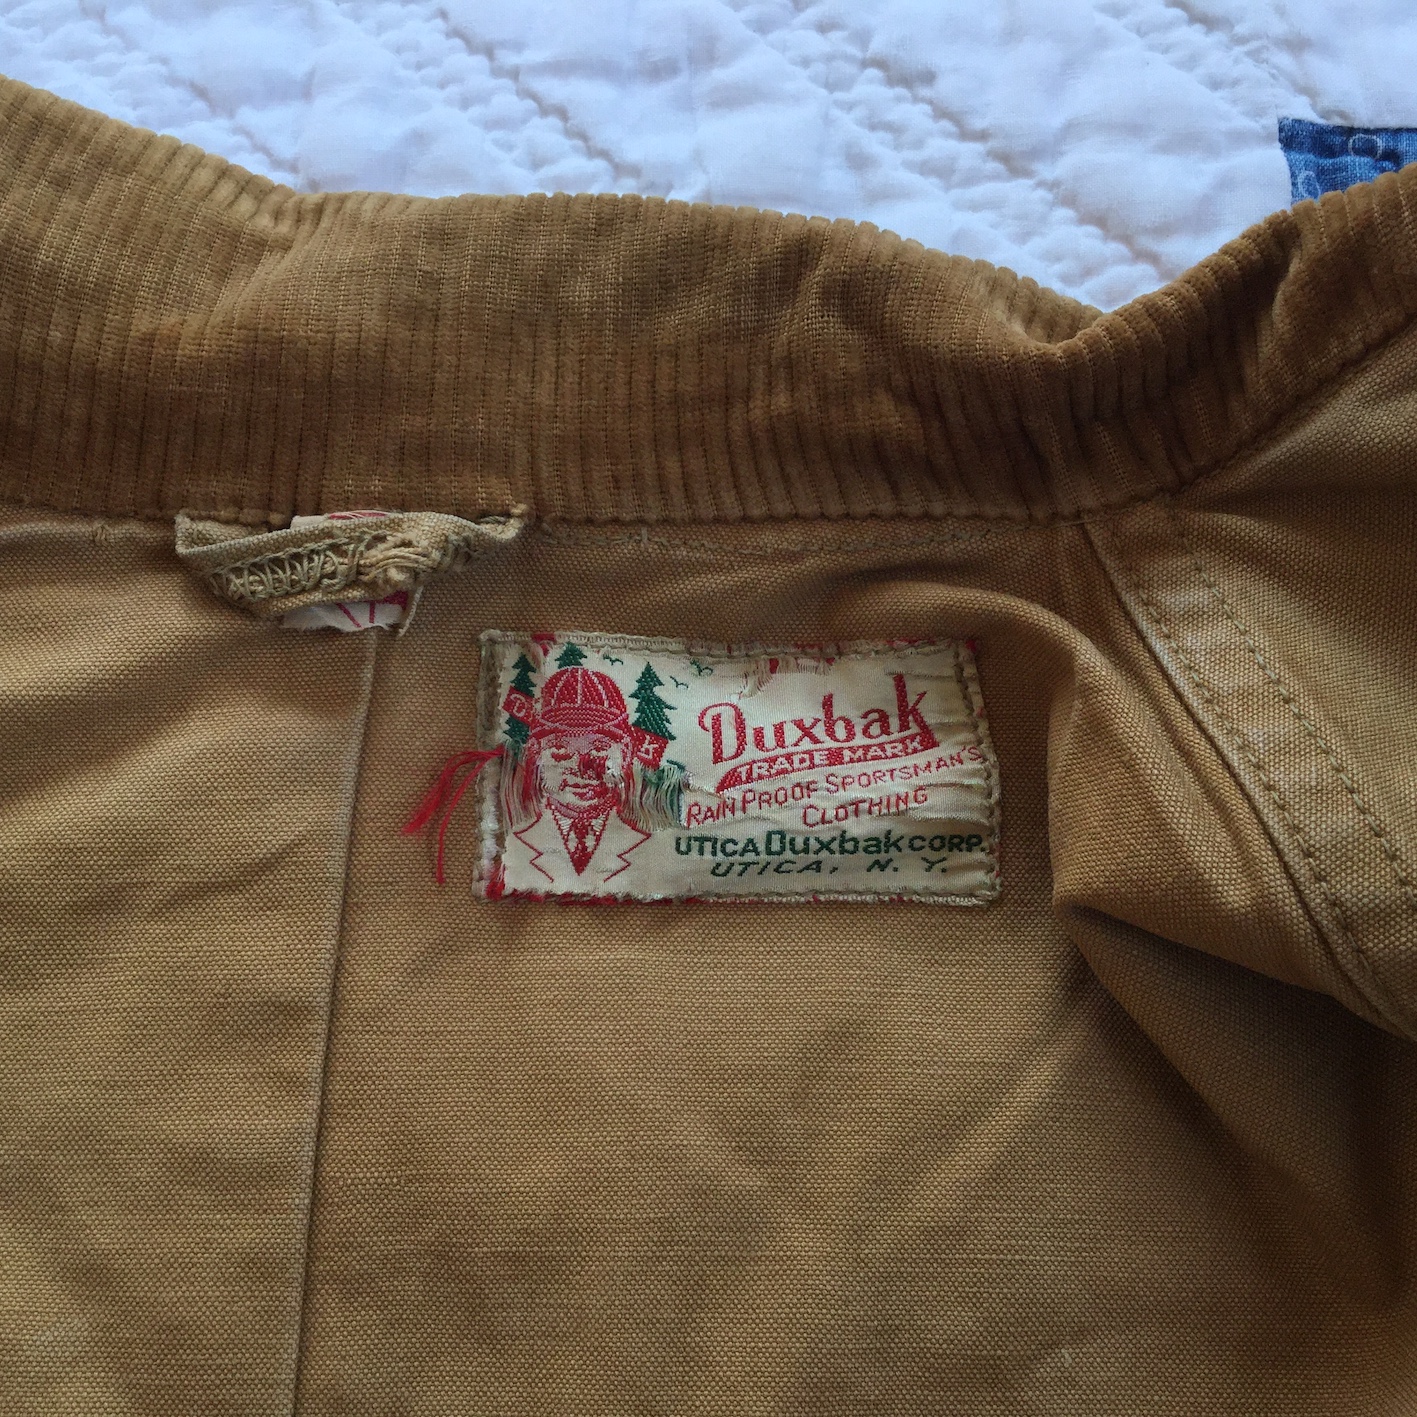 's Duxbak hunting jacket   Button Up Clothing